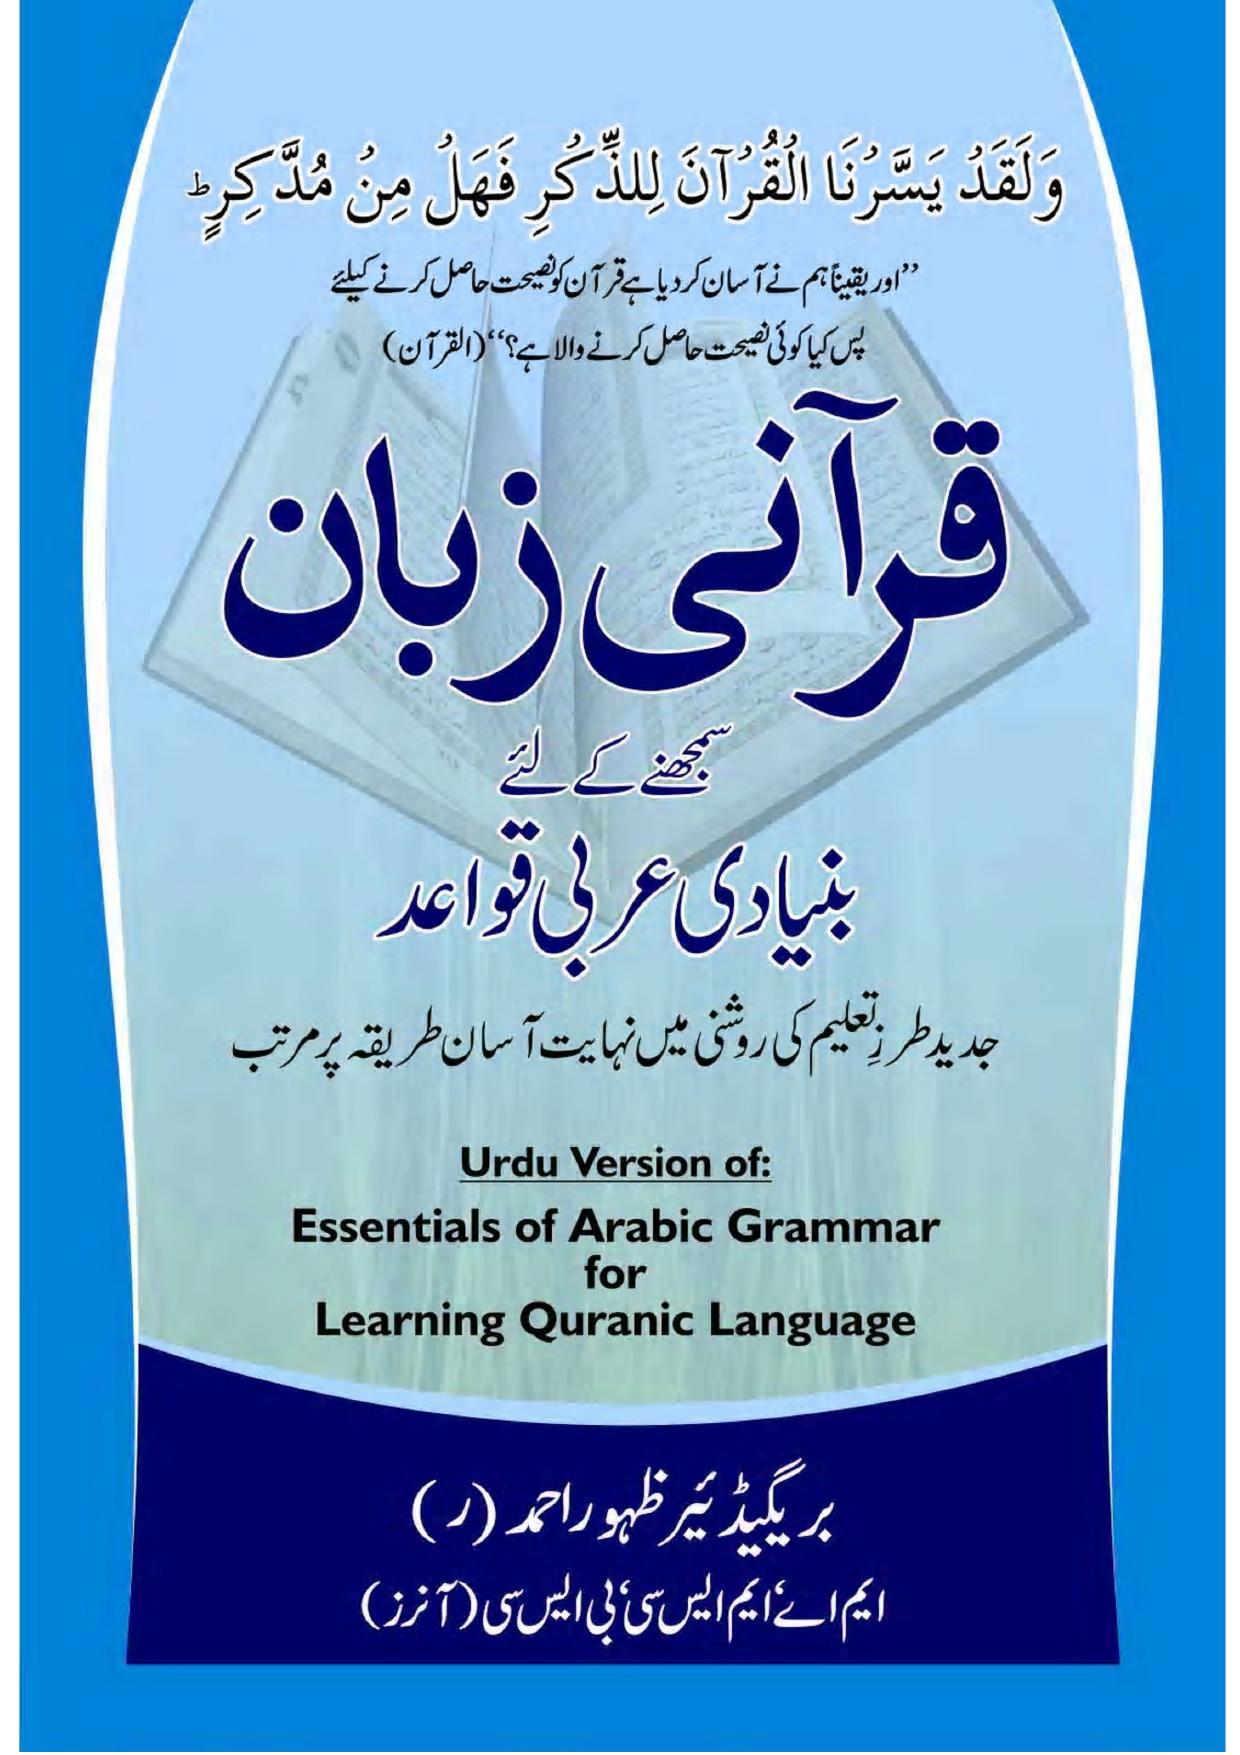 Urdu version of Essentials of Arabic Grammar for learning Qur'anic Arabic